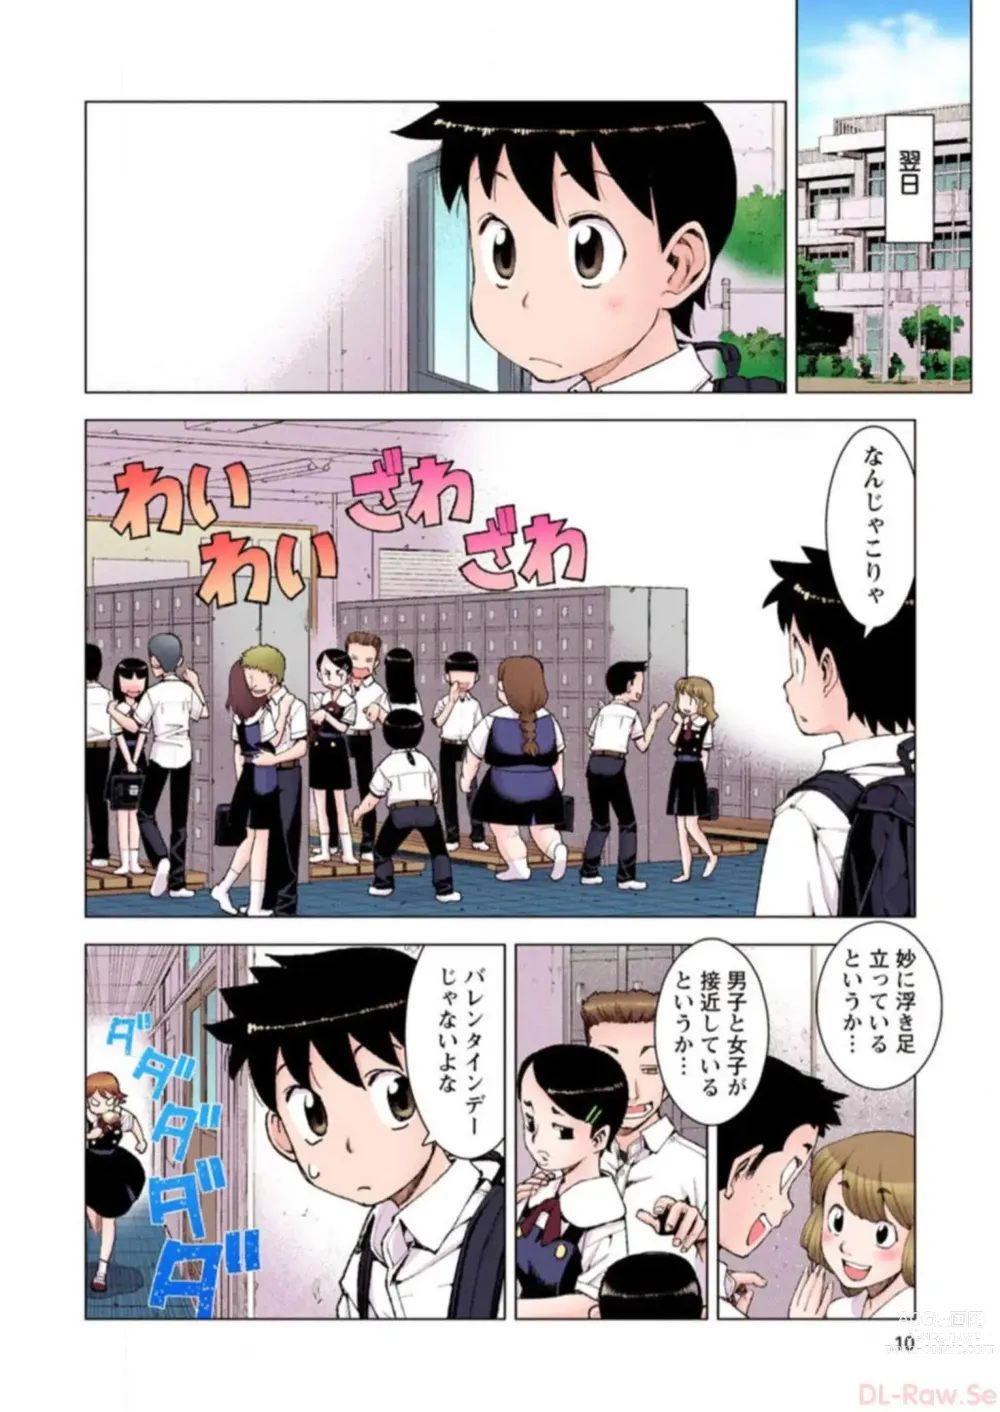 Page 10 of manga Tsugumomo Digital Colored Comics V3